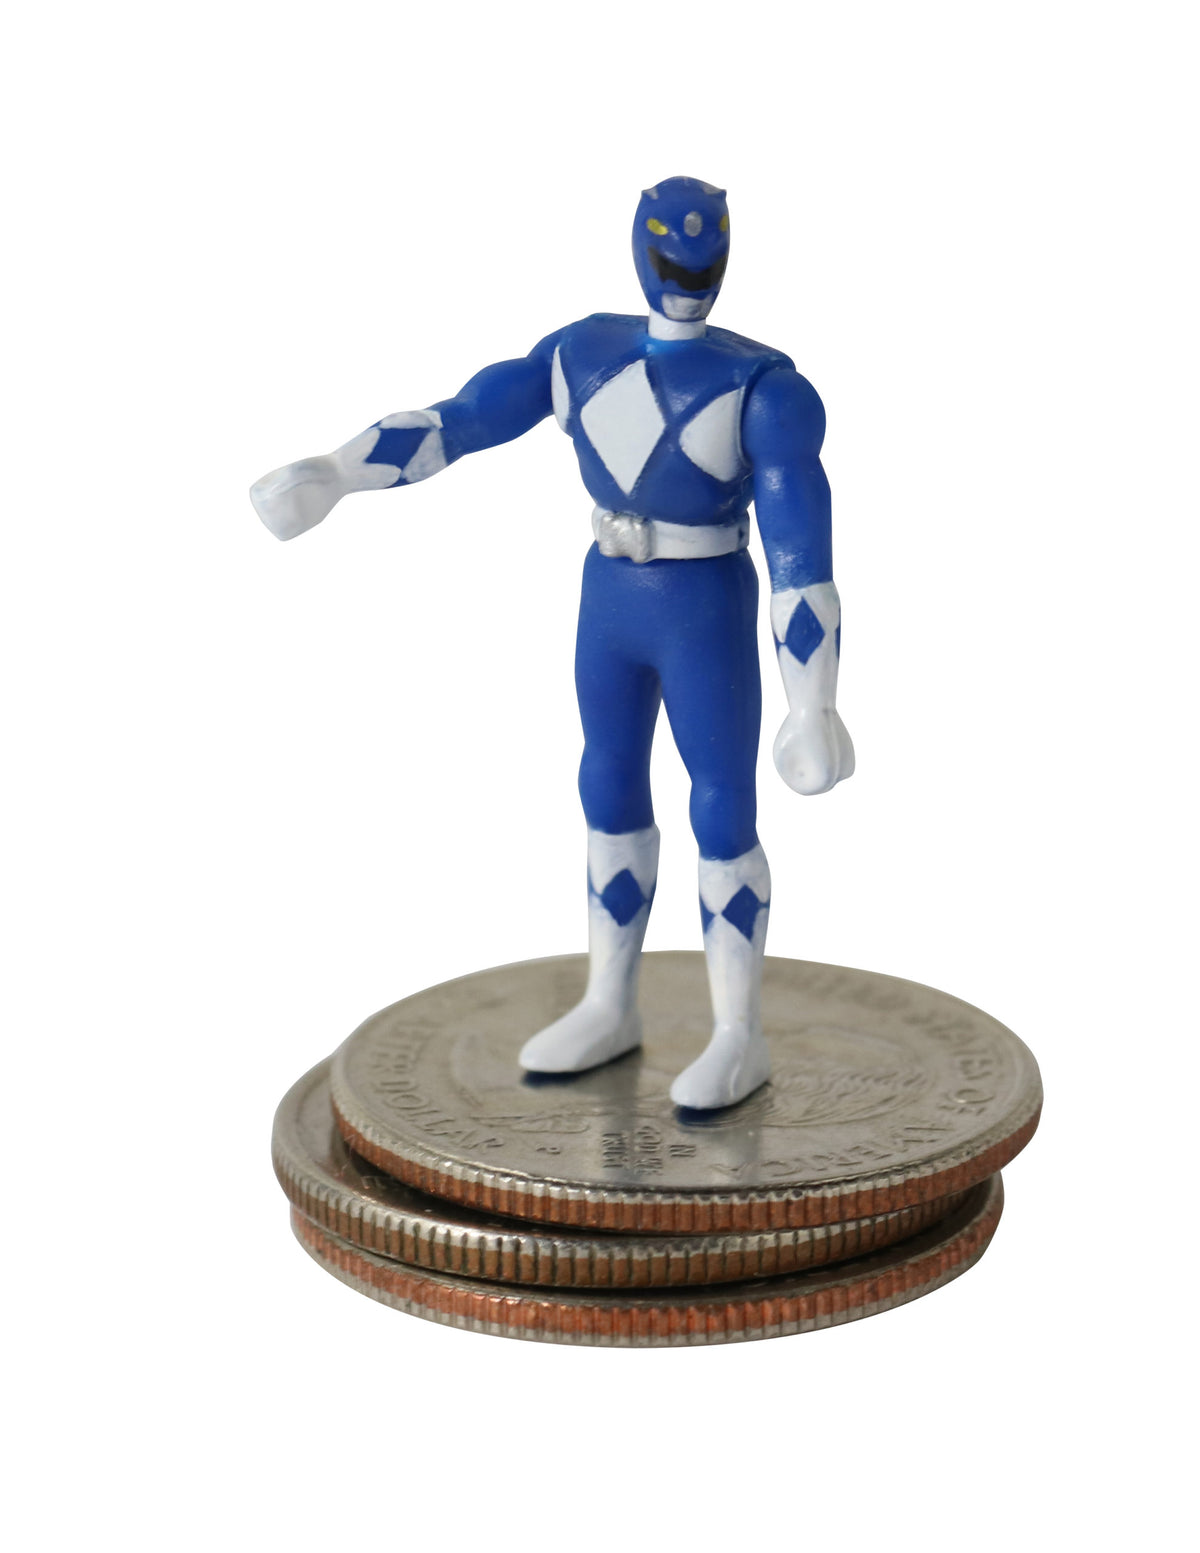 World's Smallest Power Rangers Blue Ranger Micro Action Figure - Zlc Collectibles